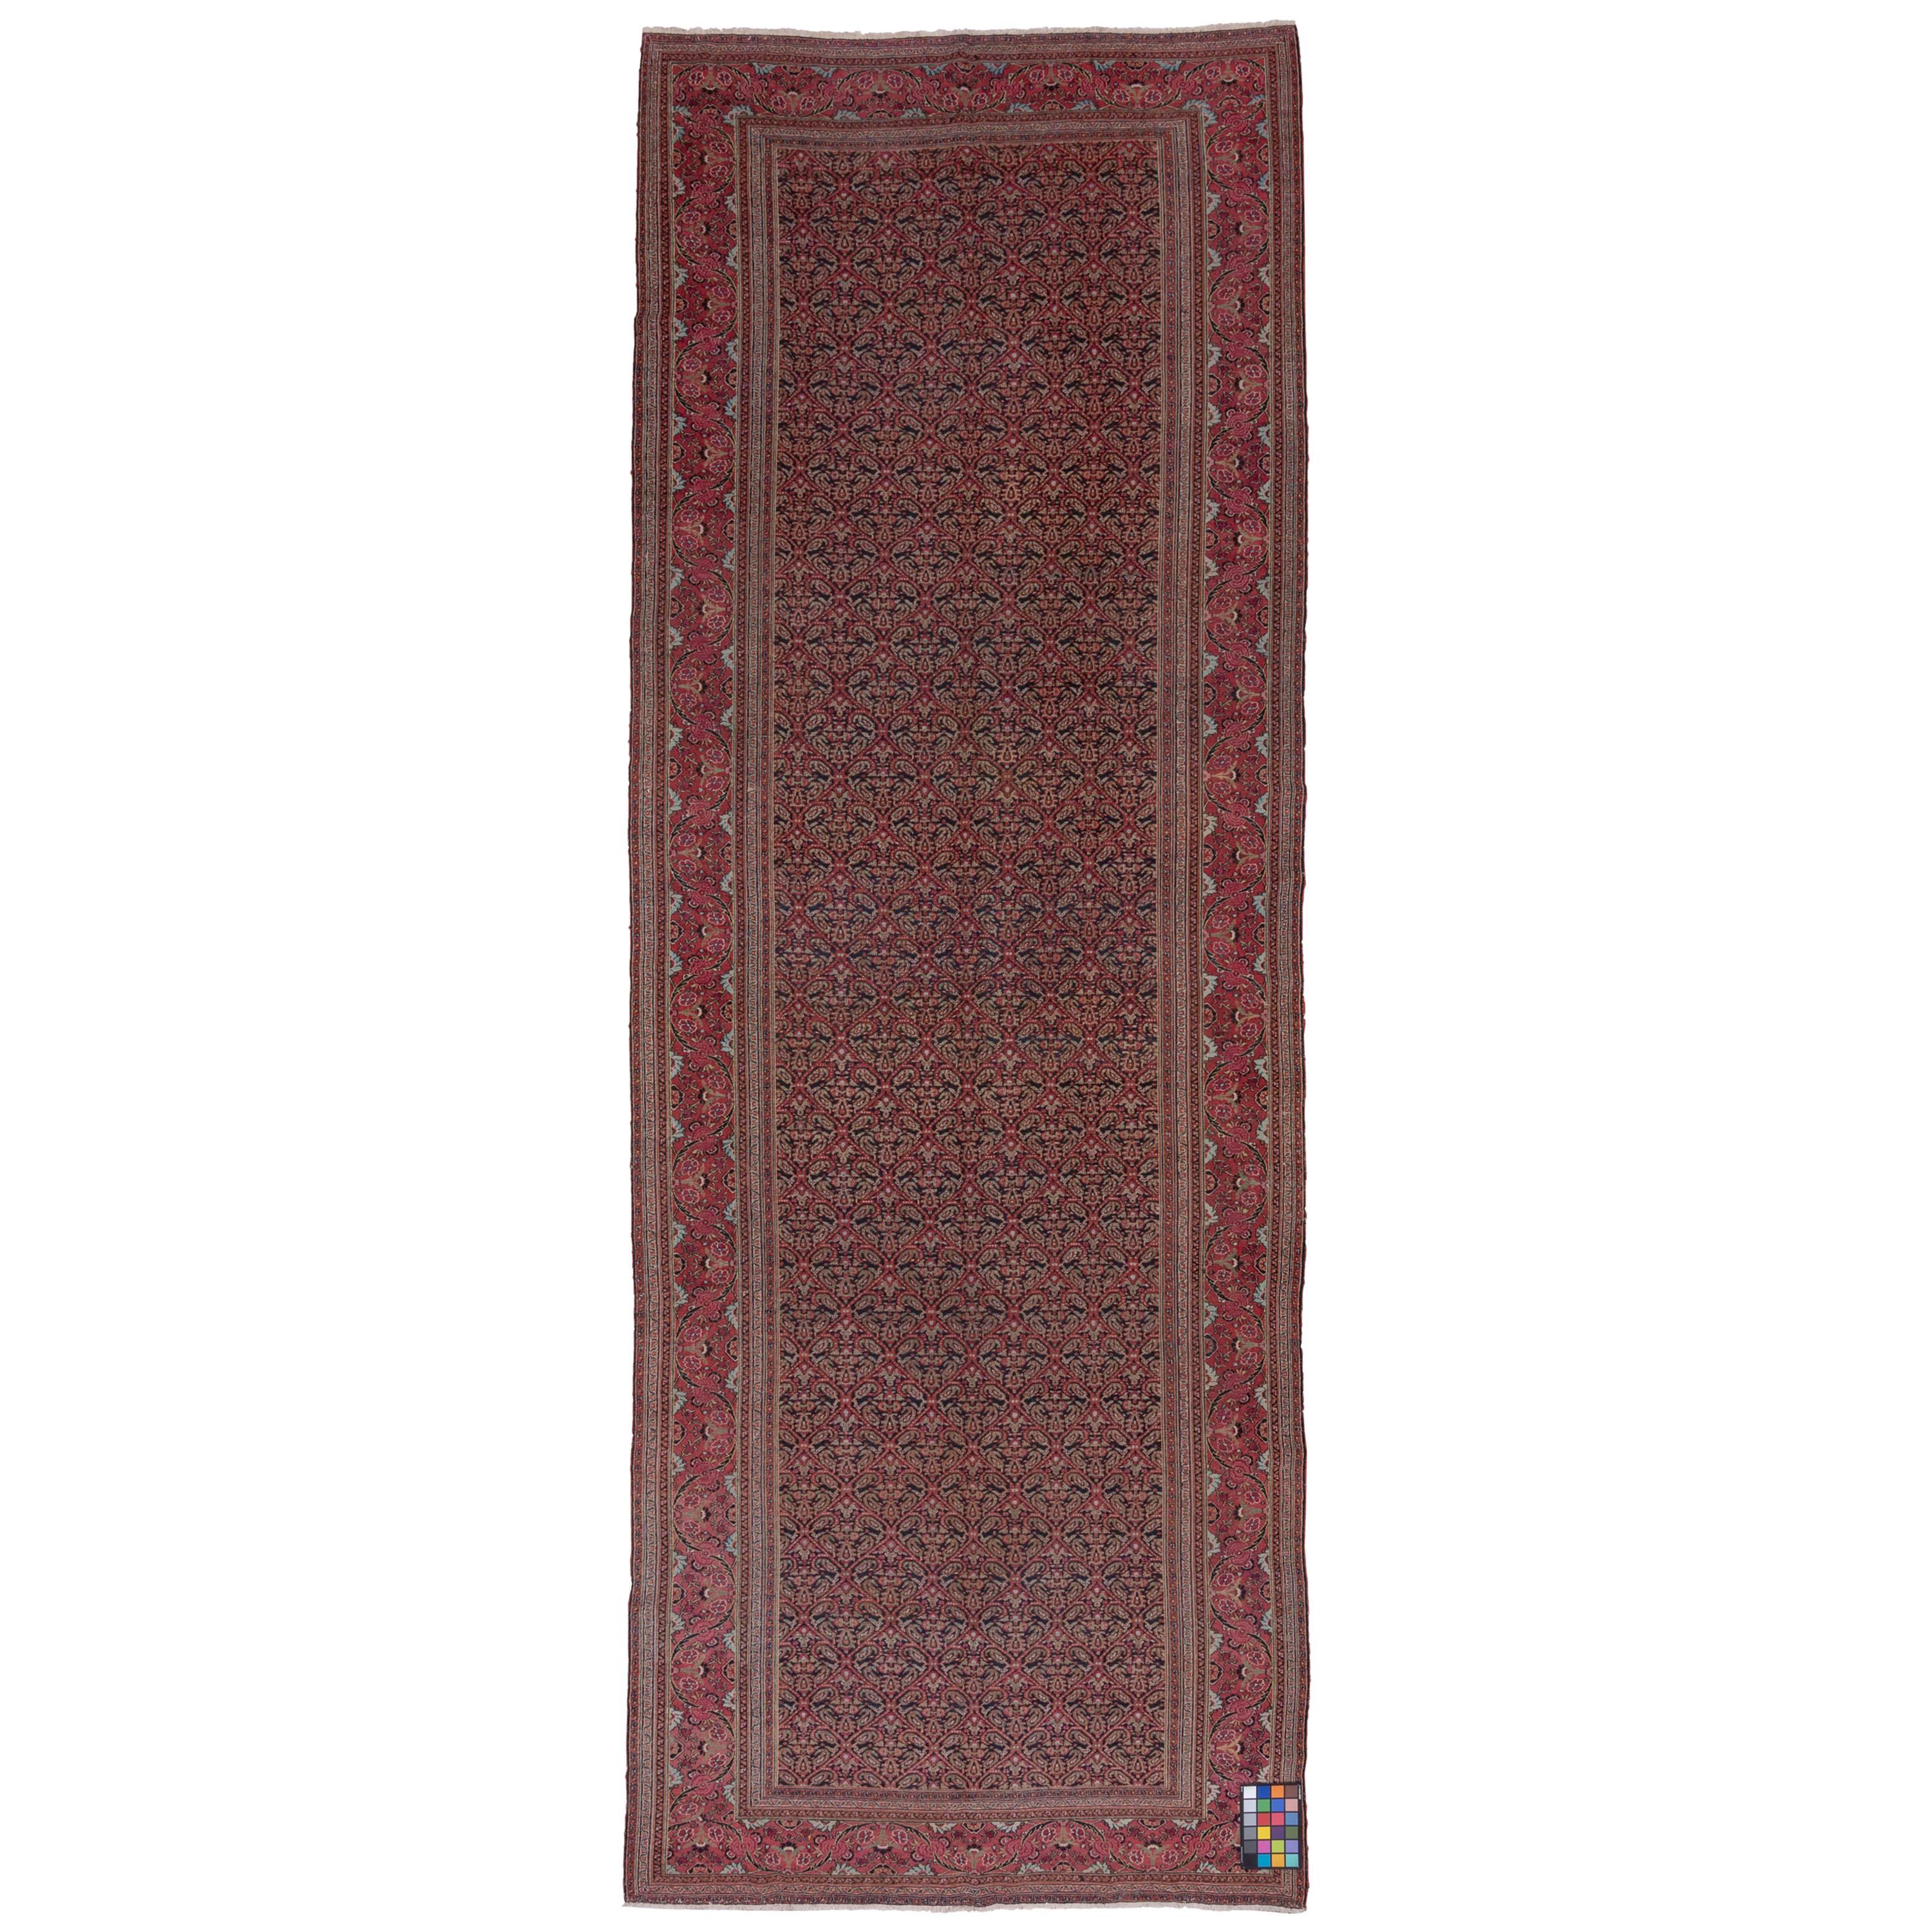 Persian Antique Khorassan Carpet, Red Field